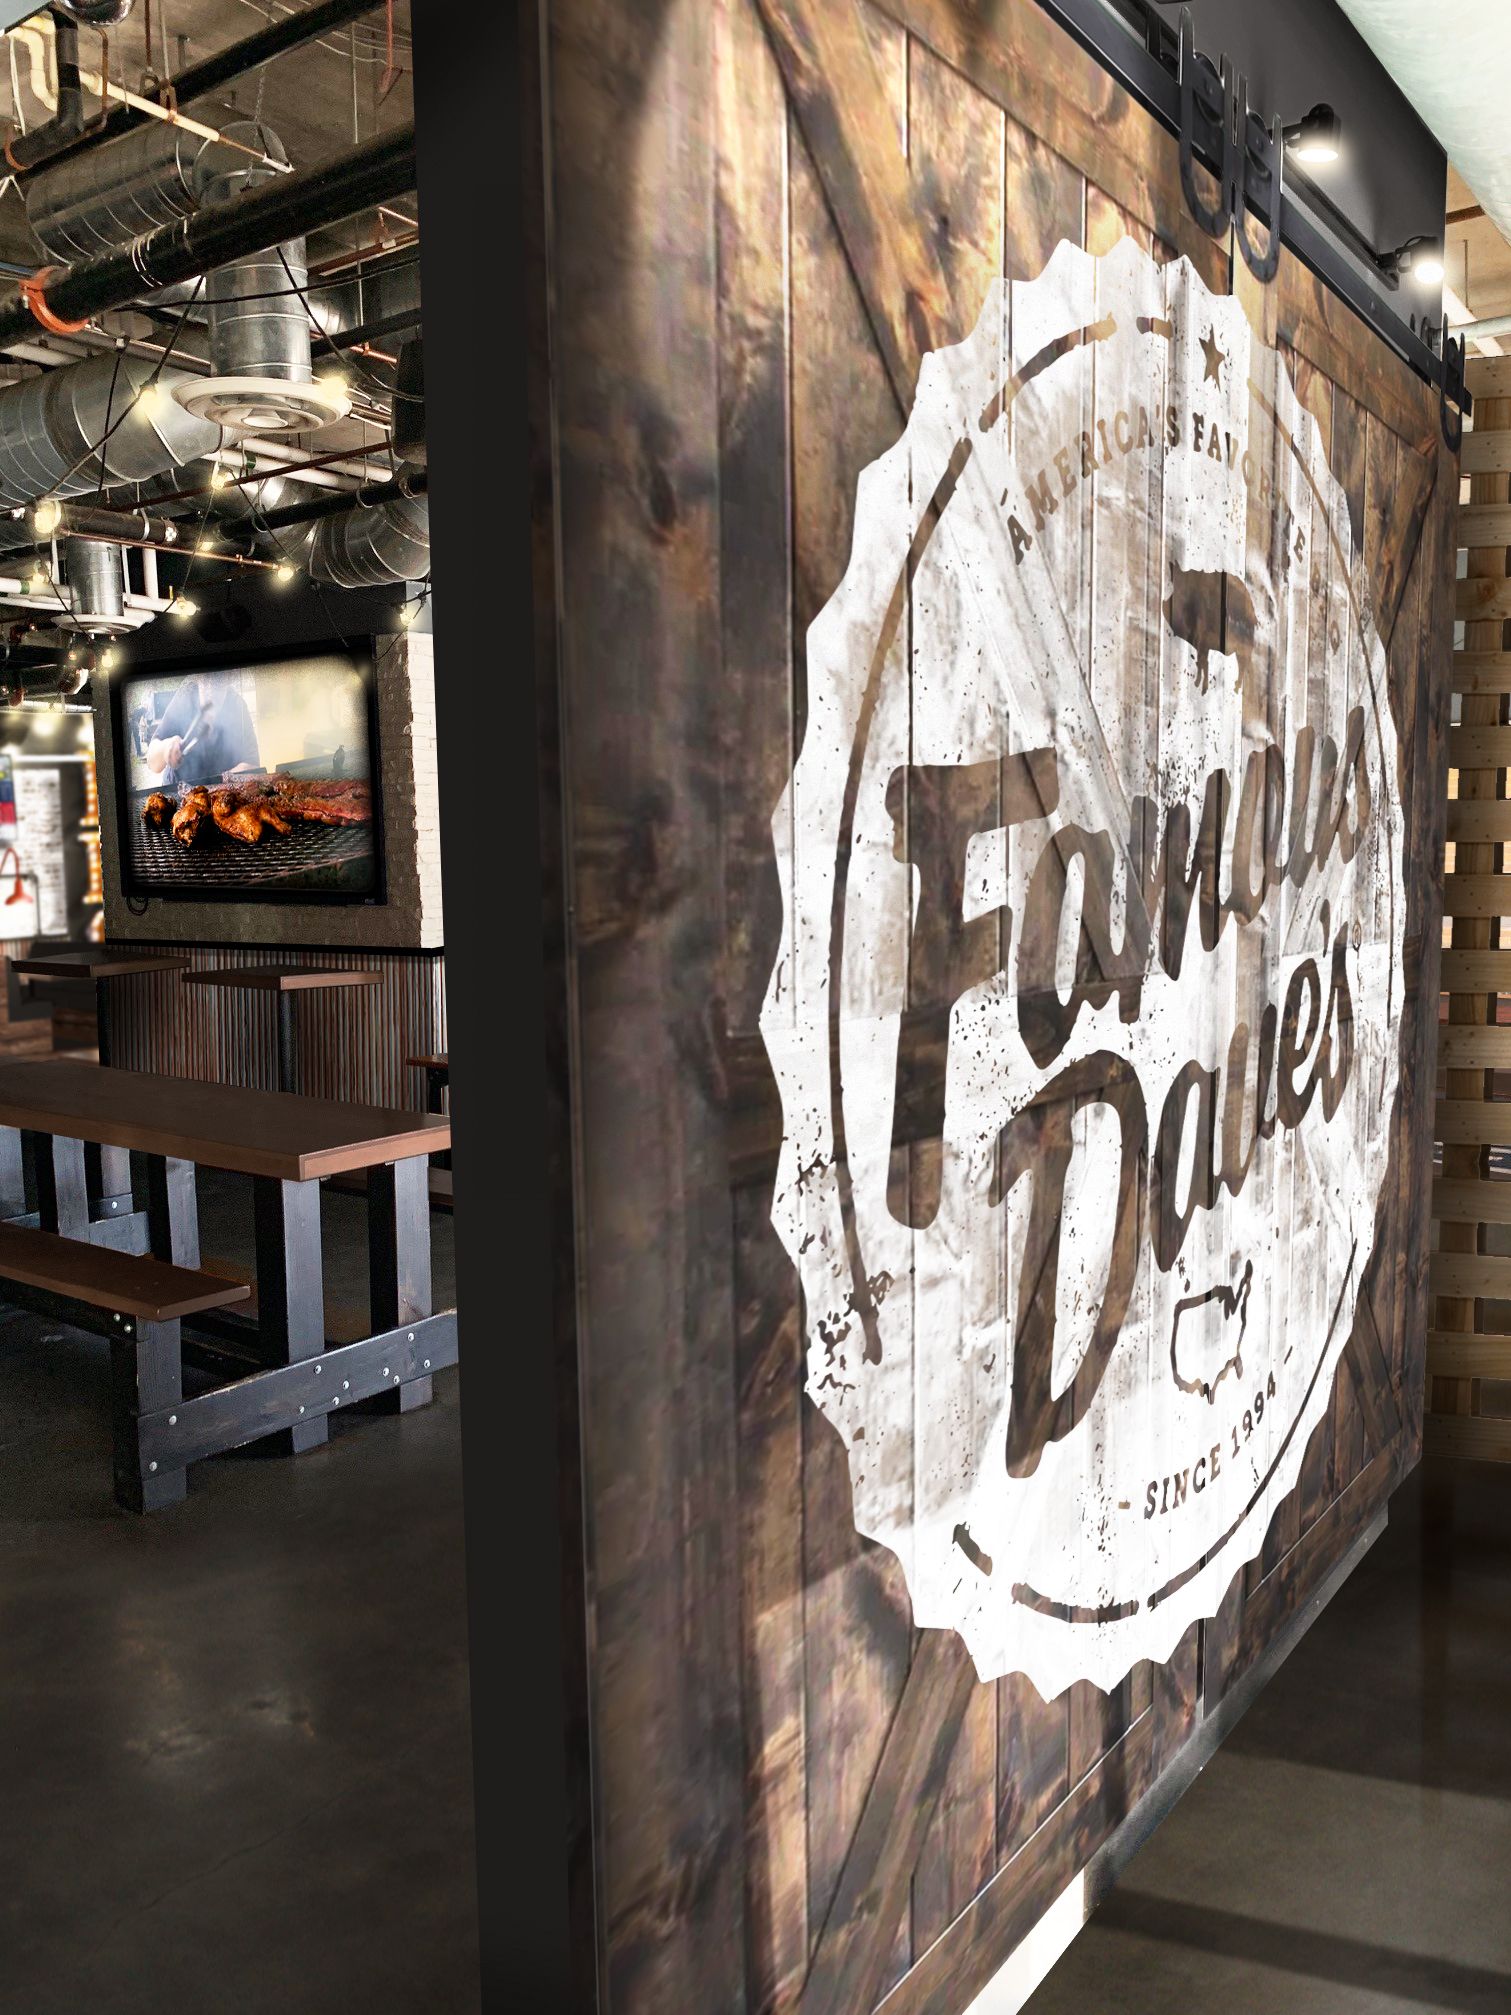 Famous Dave's Reveals New, Smaller Footprint Prototype Restaurant in Uptown, Minneapolis on December 20